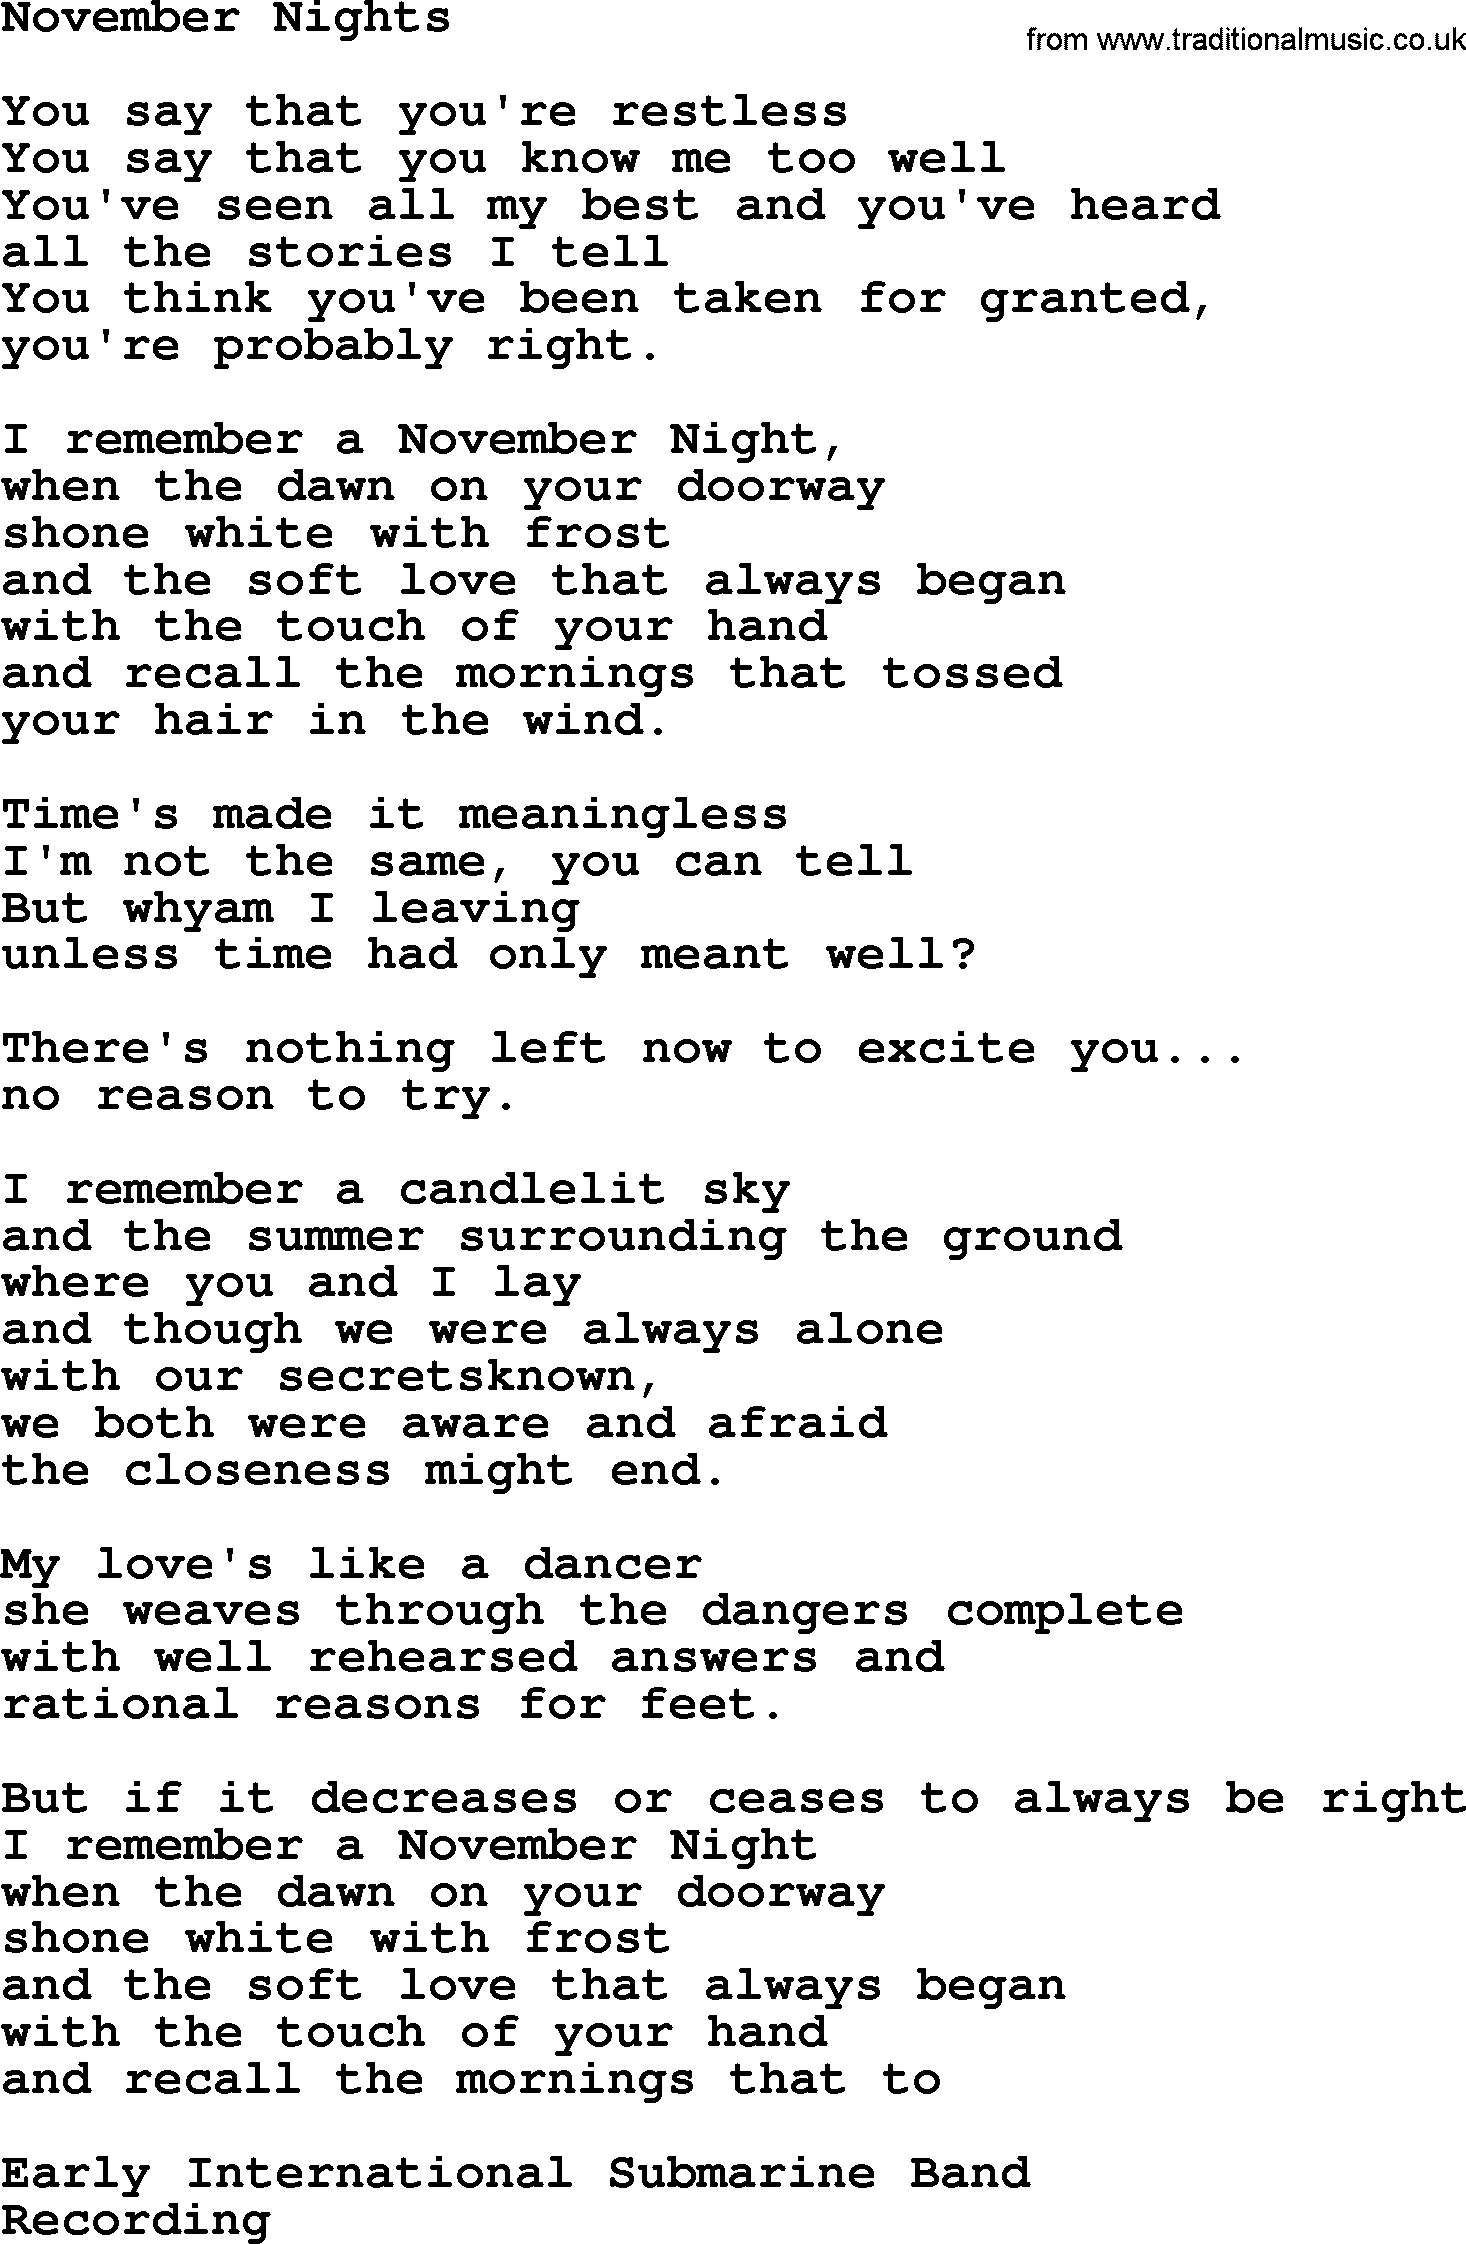 The Byrds song November Nights, lyrics